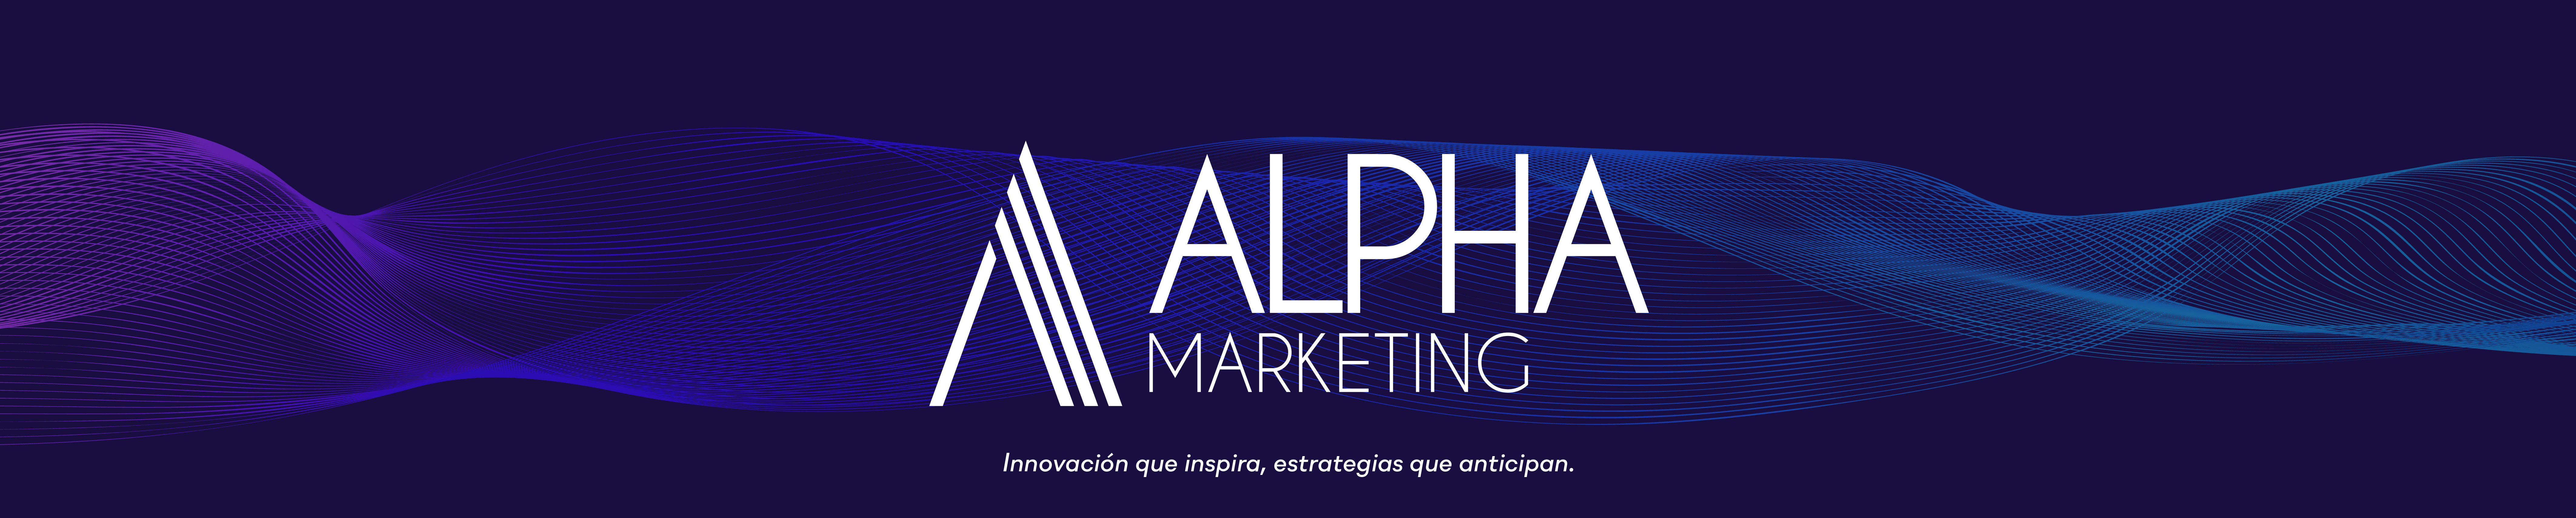 Баннер профиля Alpha Marketing